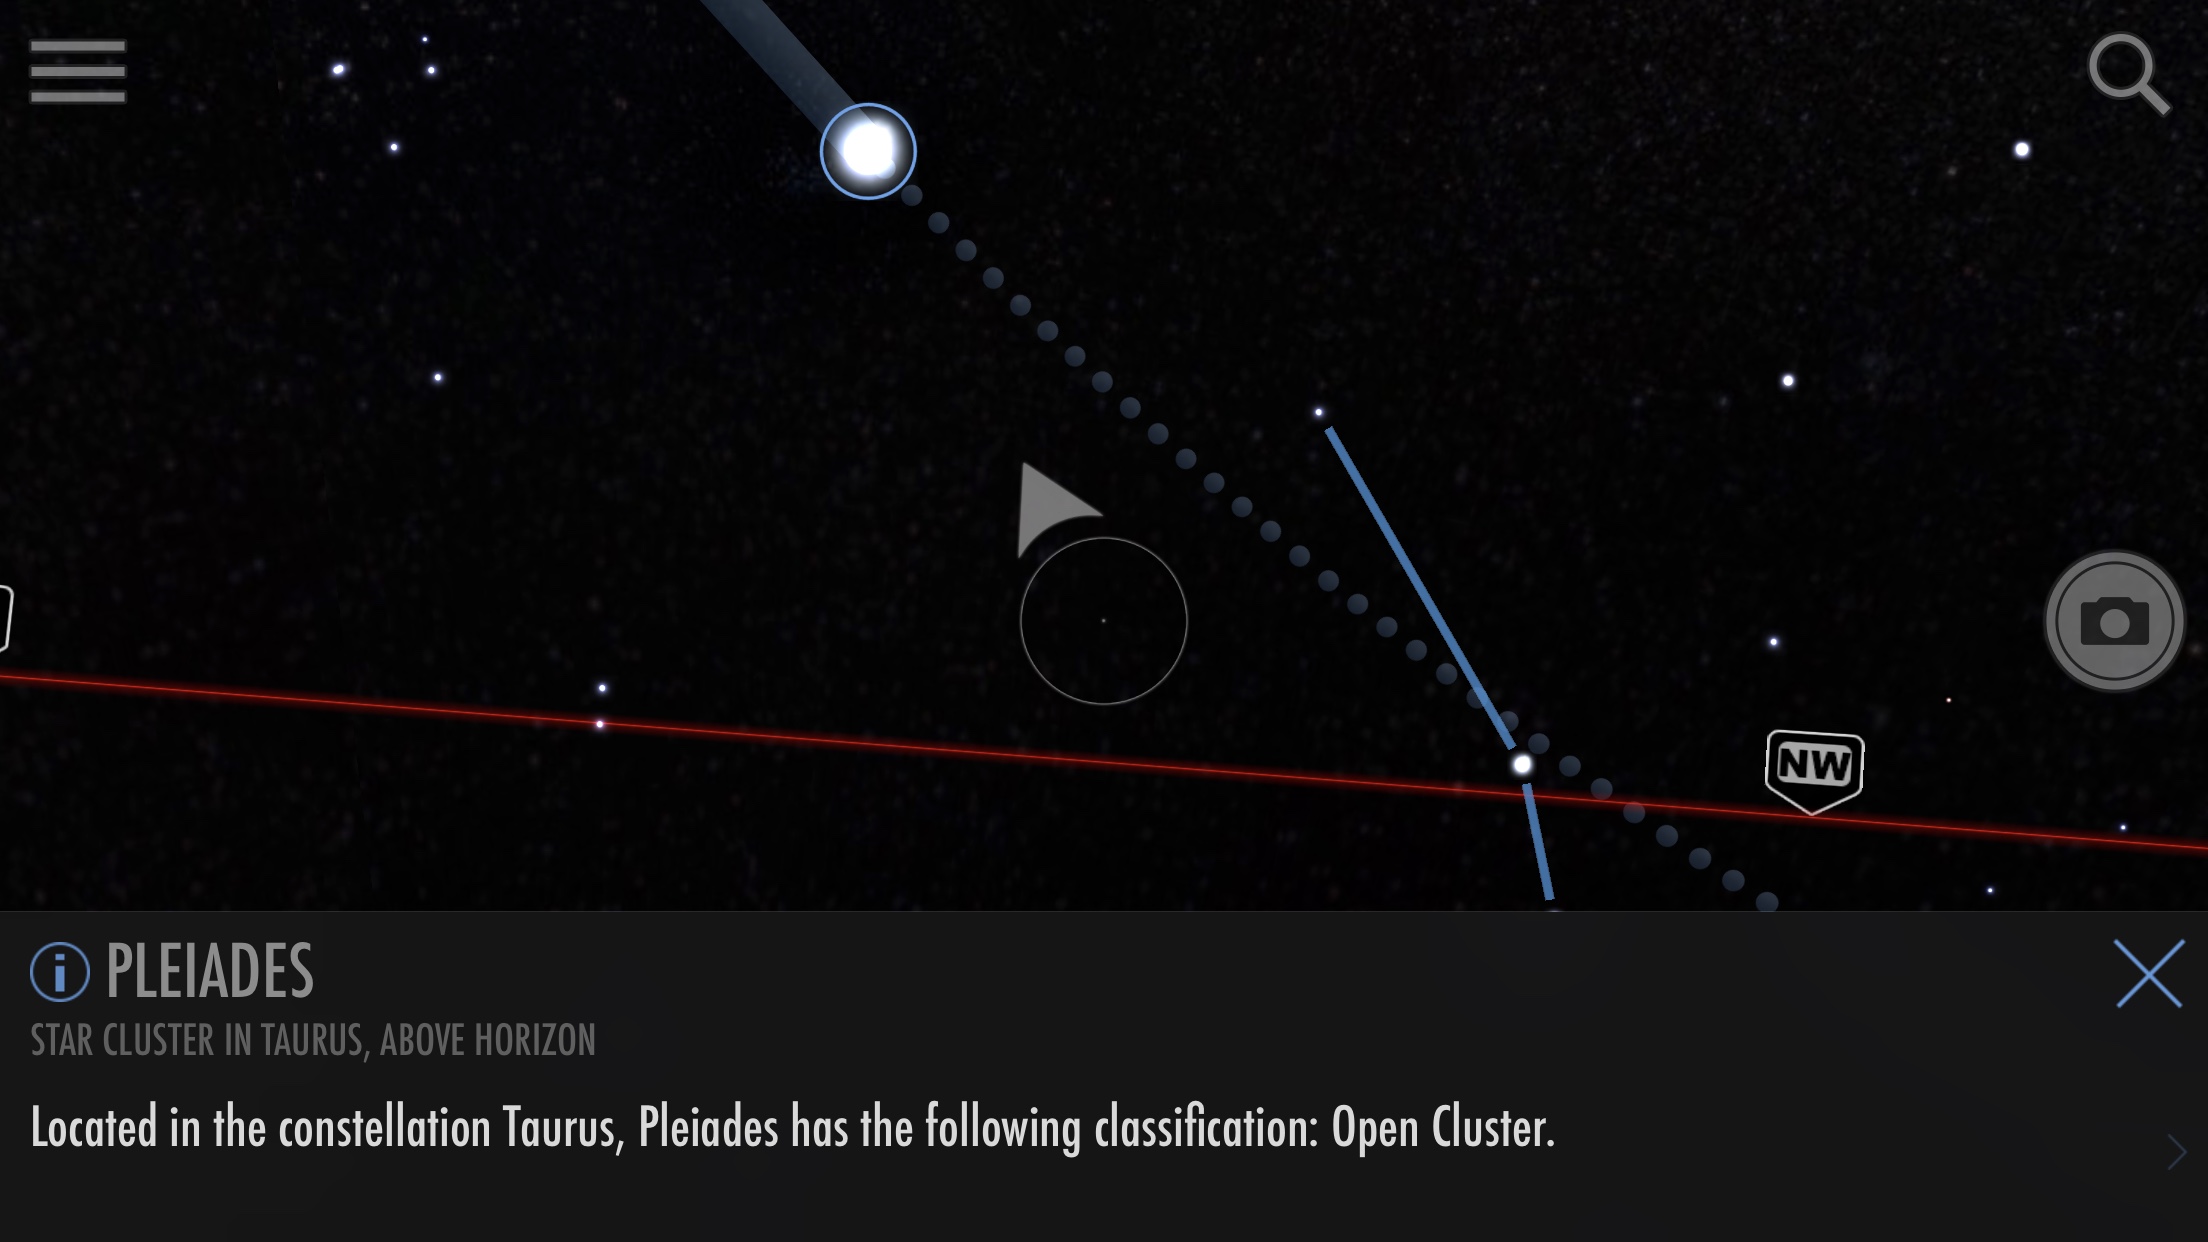 Finding Pleiades star cluster in SkyView iOS app screenshot